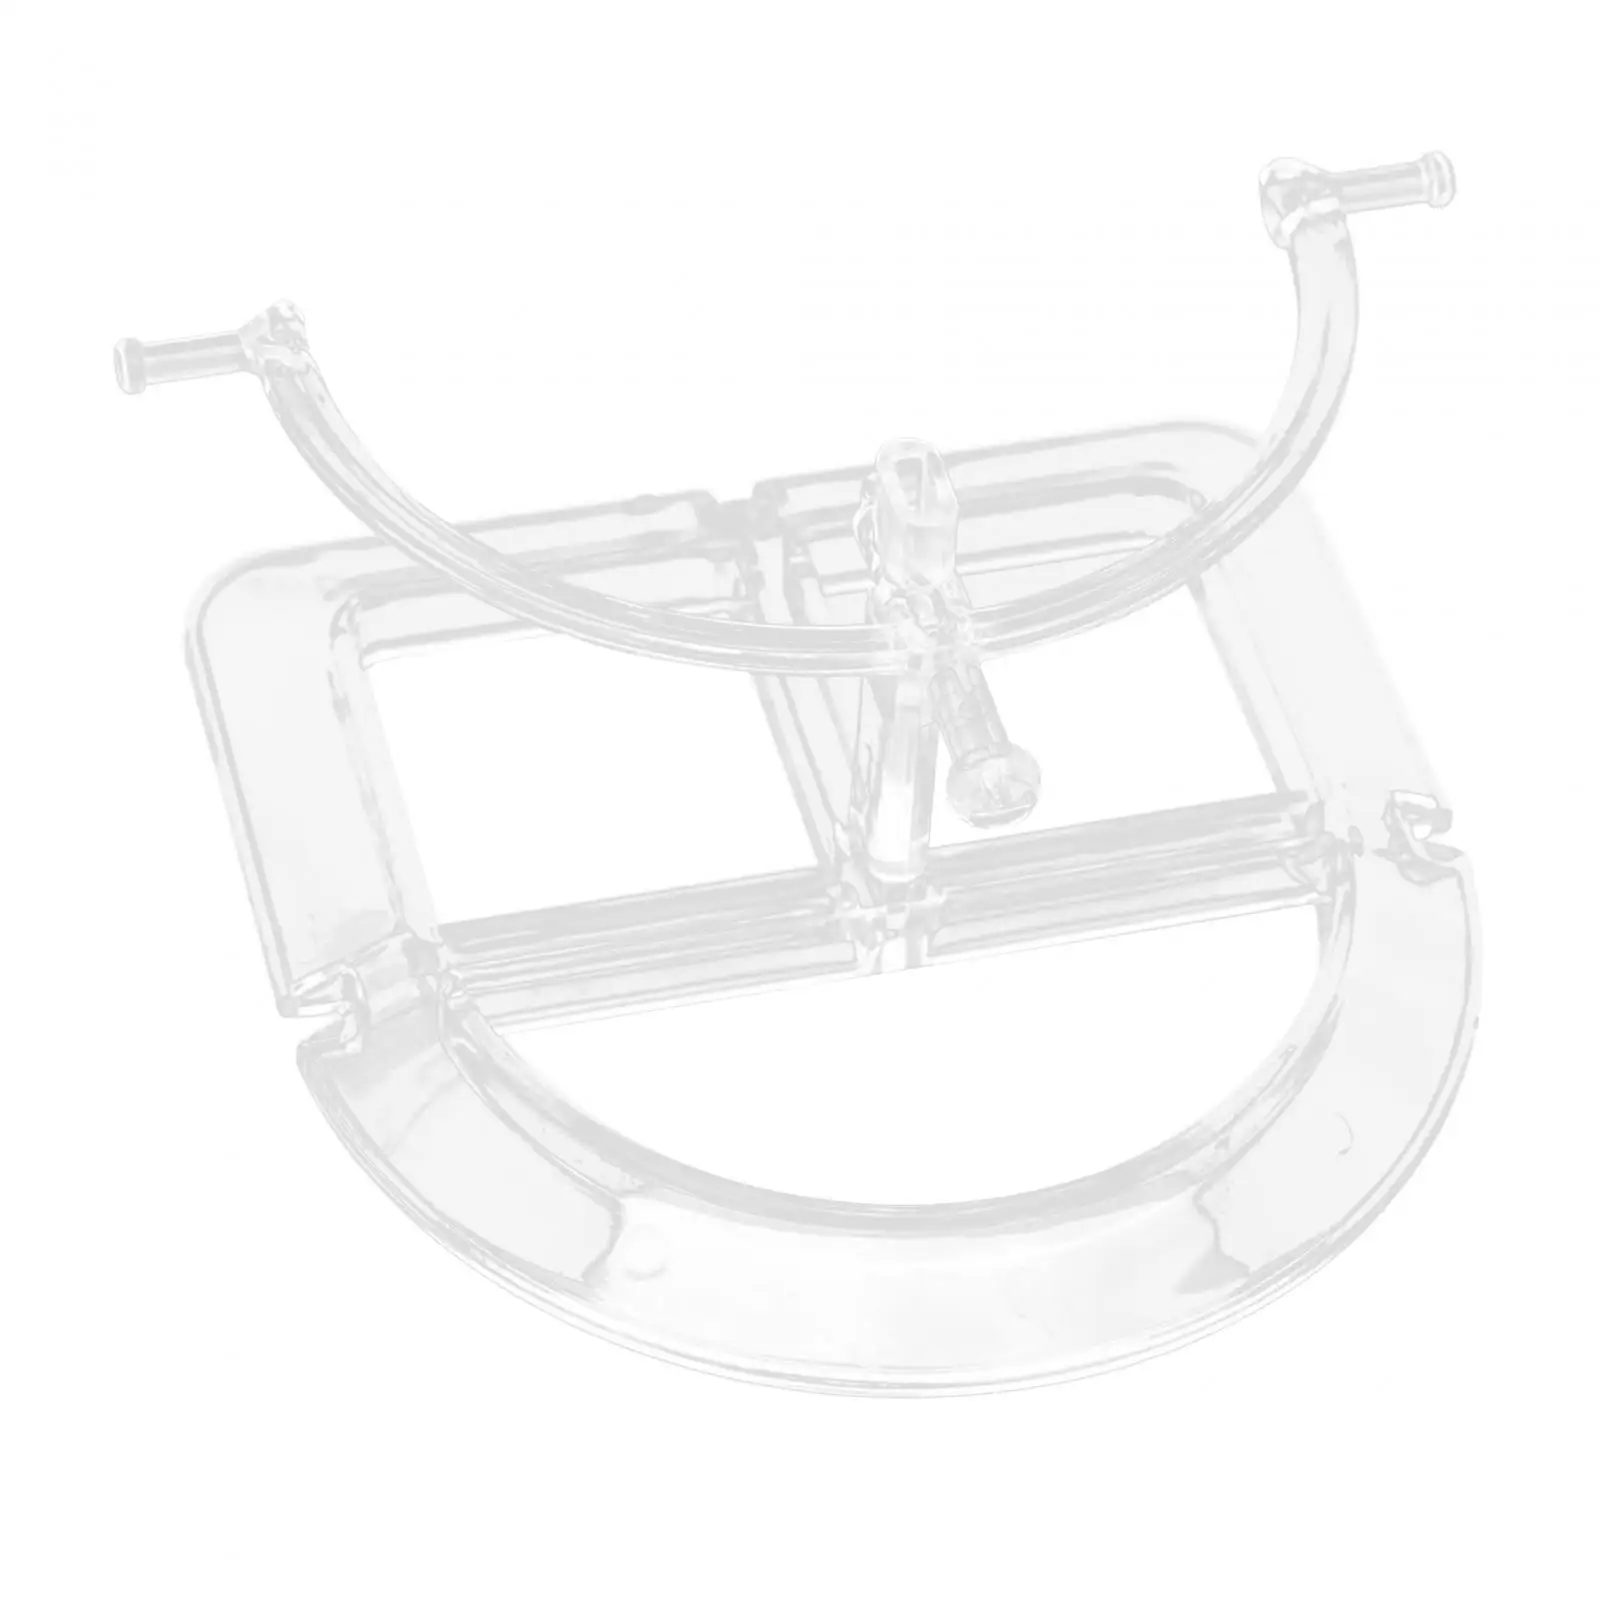 Sunglass Rack Eyewear Display Eyeglasses Frame Riser Display Stand Glasses Organizer for home Tabletop Retail Shop